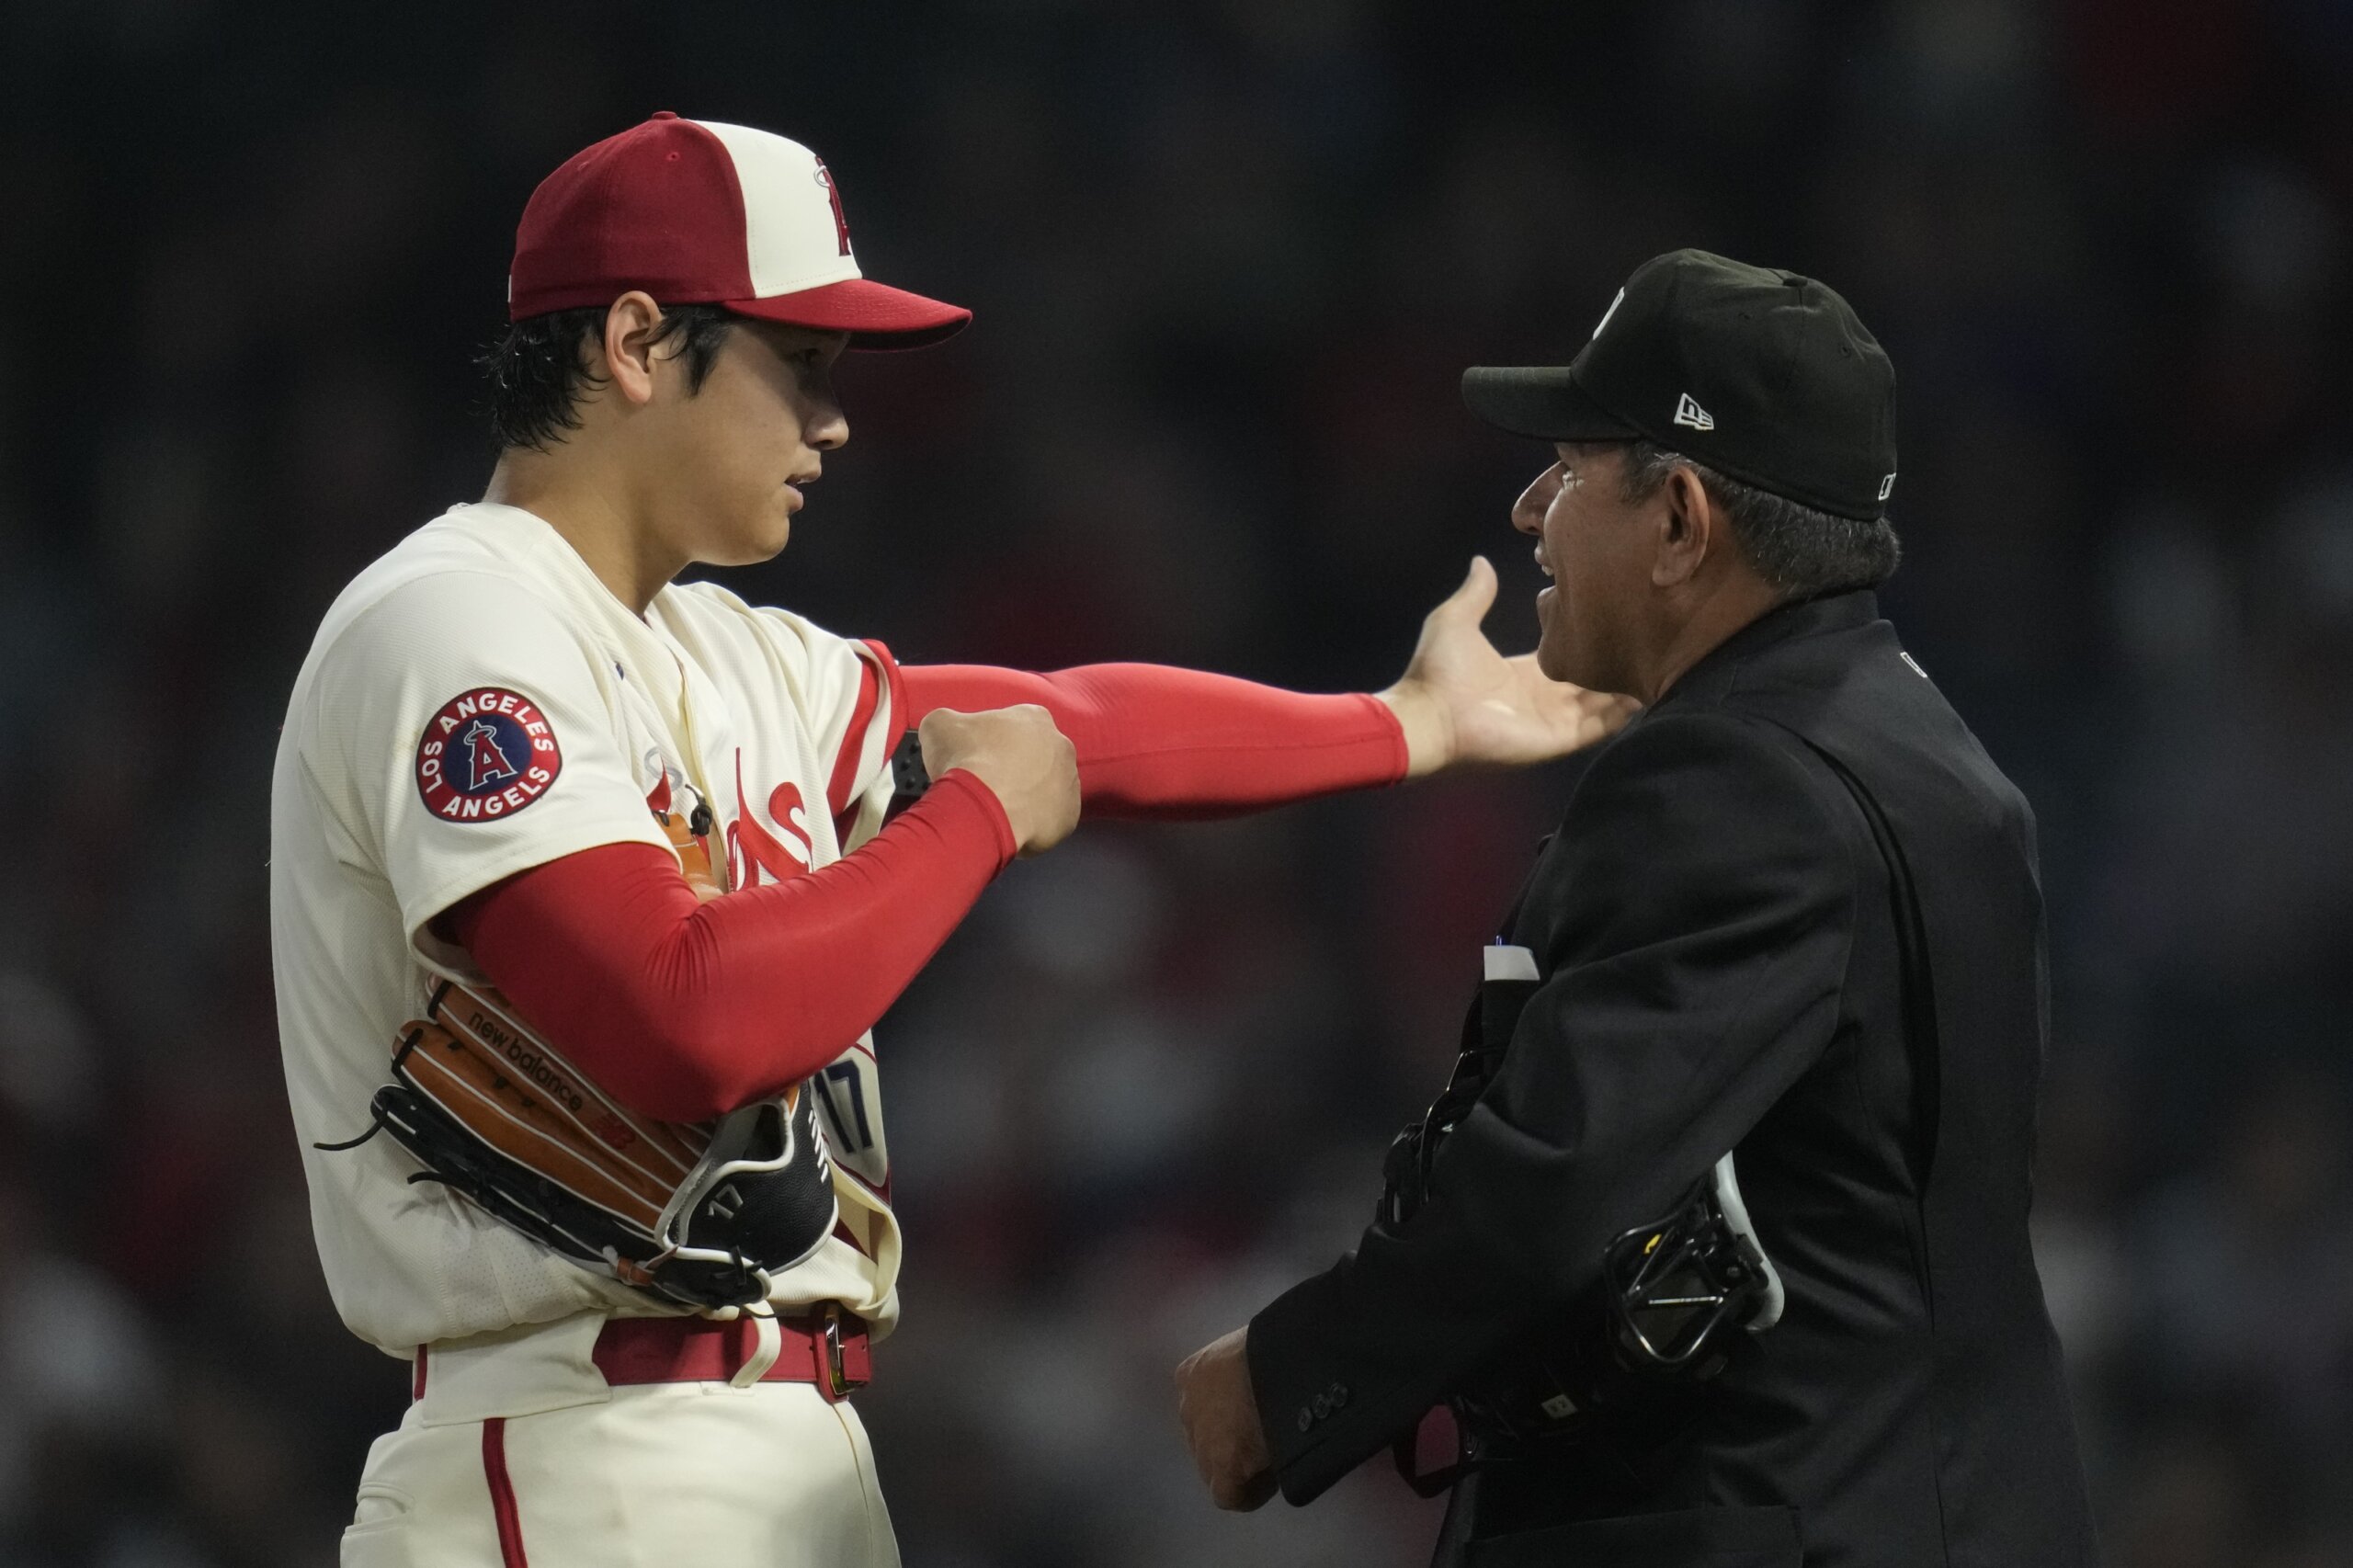 MLB rumors: Red Sox add impact bat? Angels' Shohei Ohtani update